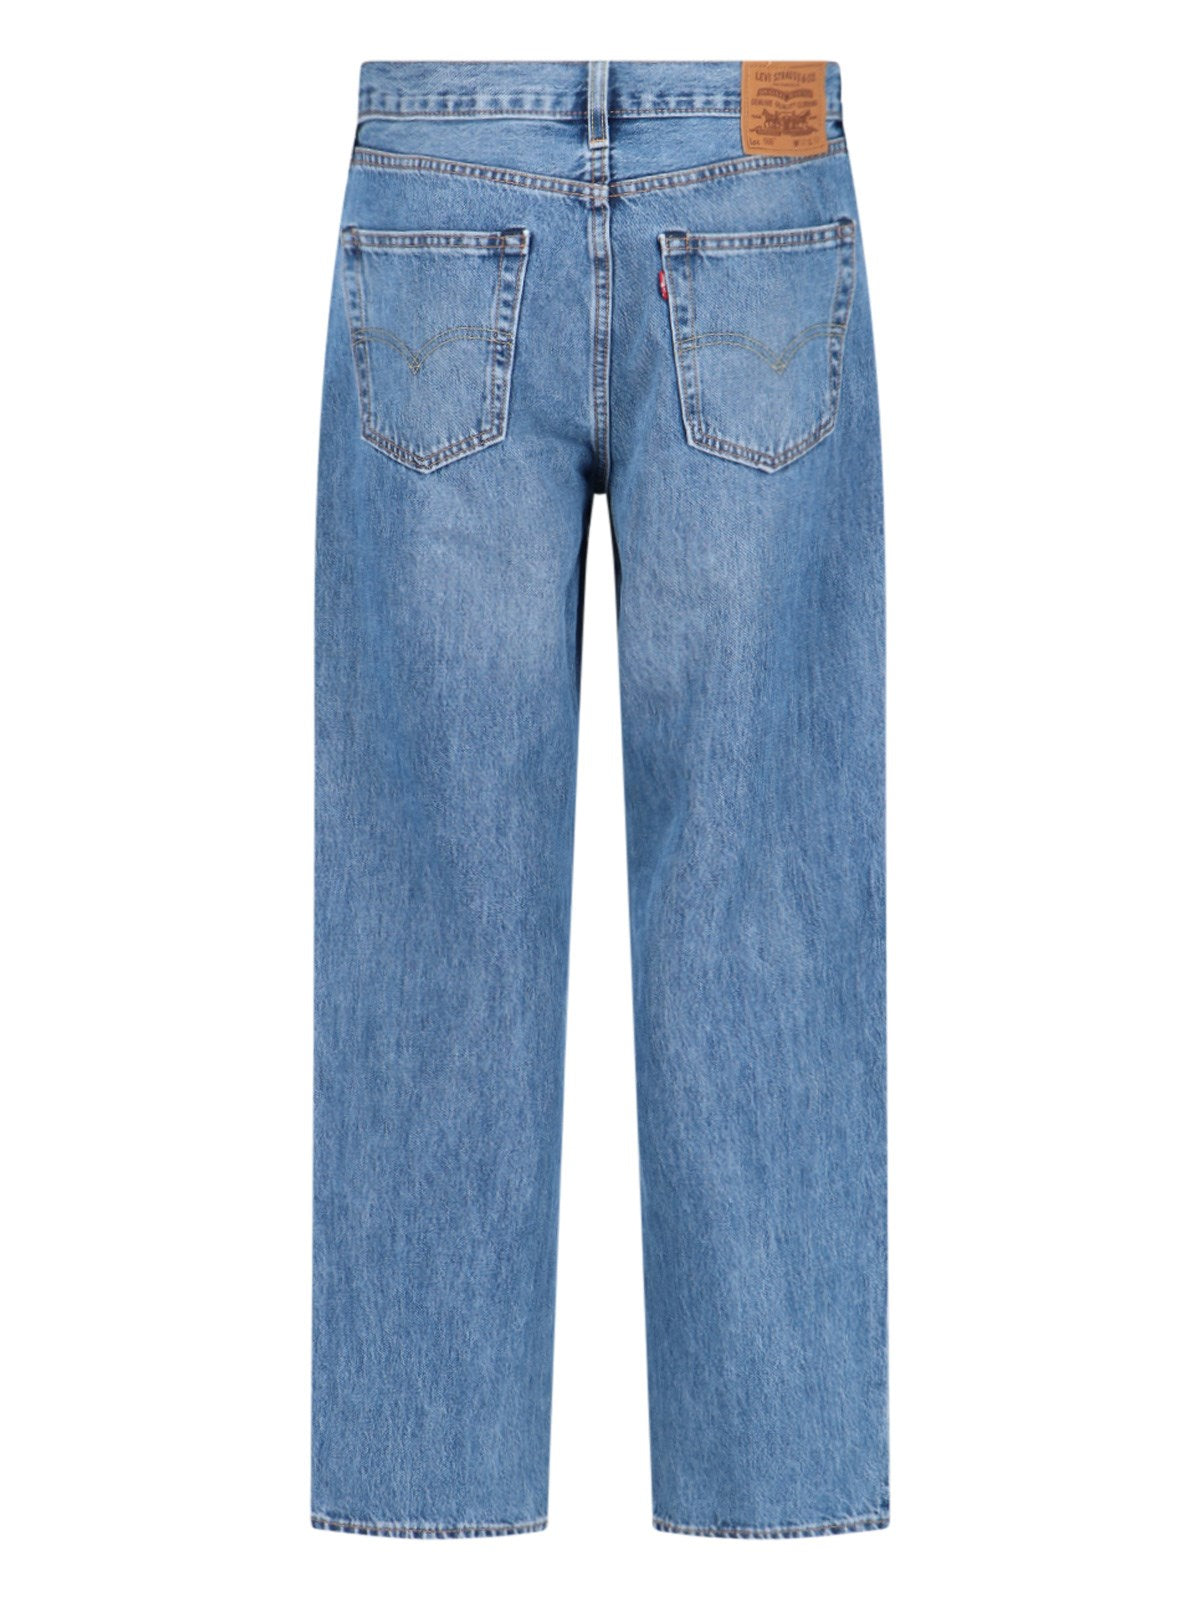 levi's strauss jeans " 501® "